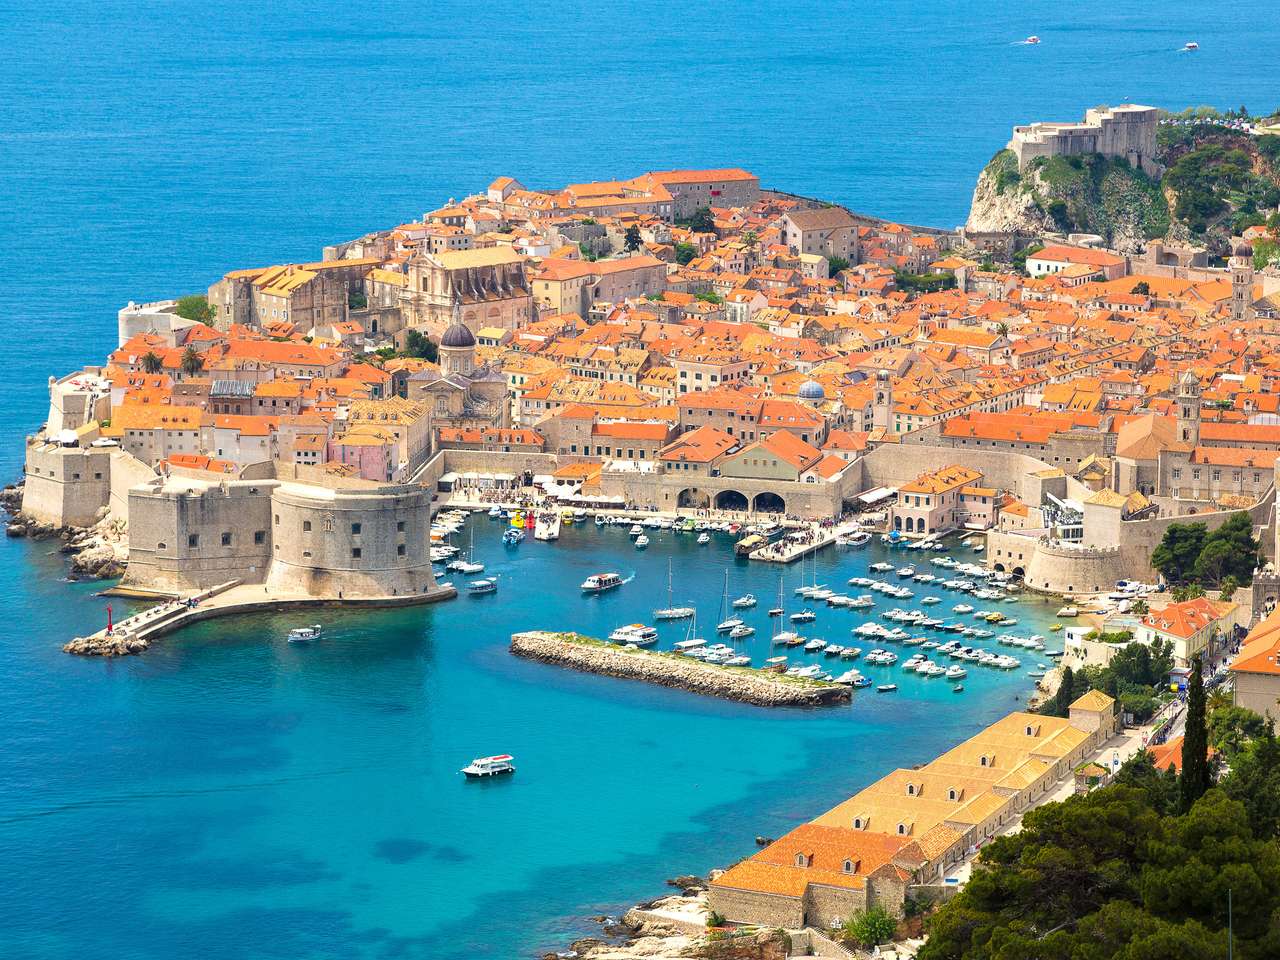 Luchtmening van oude stad Dubrovnik legpuzzel online